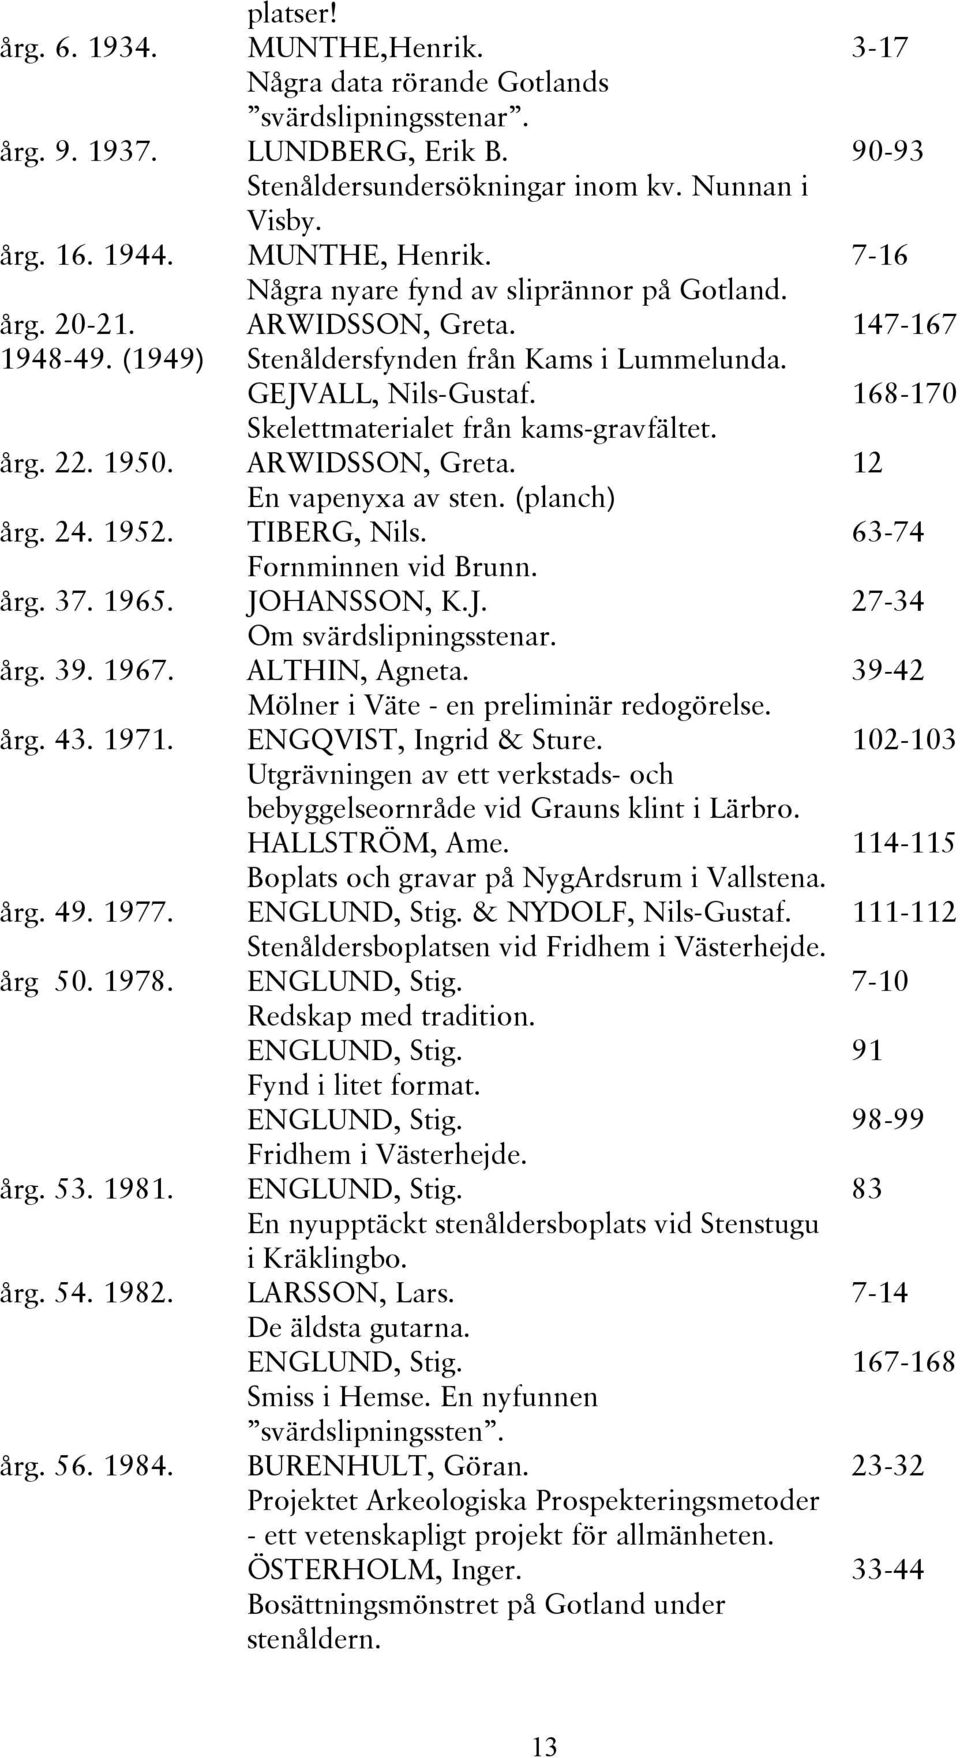 1950. ARWIDSSON, Greta. En vapenyxa av sten. (planch) årg. 24. 1952. TIBERG, Nils. Fornminnen vid Brunn. årg. 37. 1965. JOHANSSON, K.J. Om svärdslipningsstenar. årg. 39. 1967. ALTHIN, Agneta.